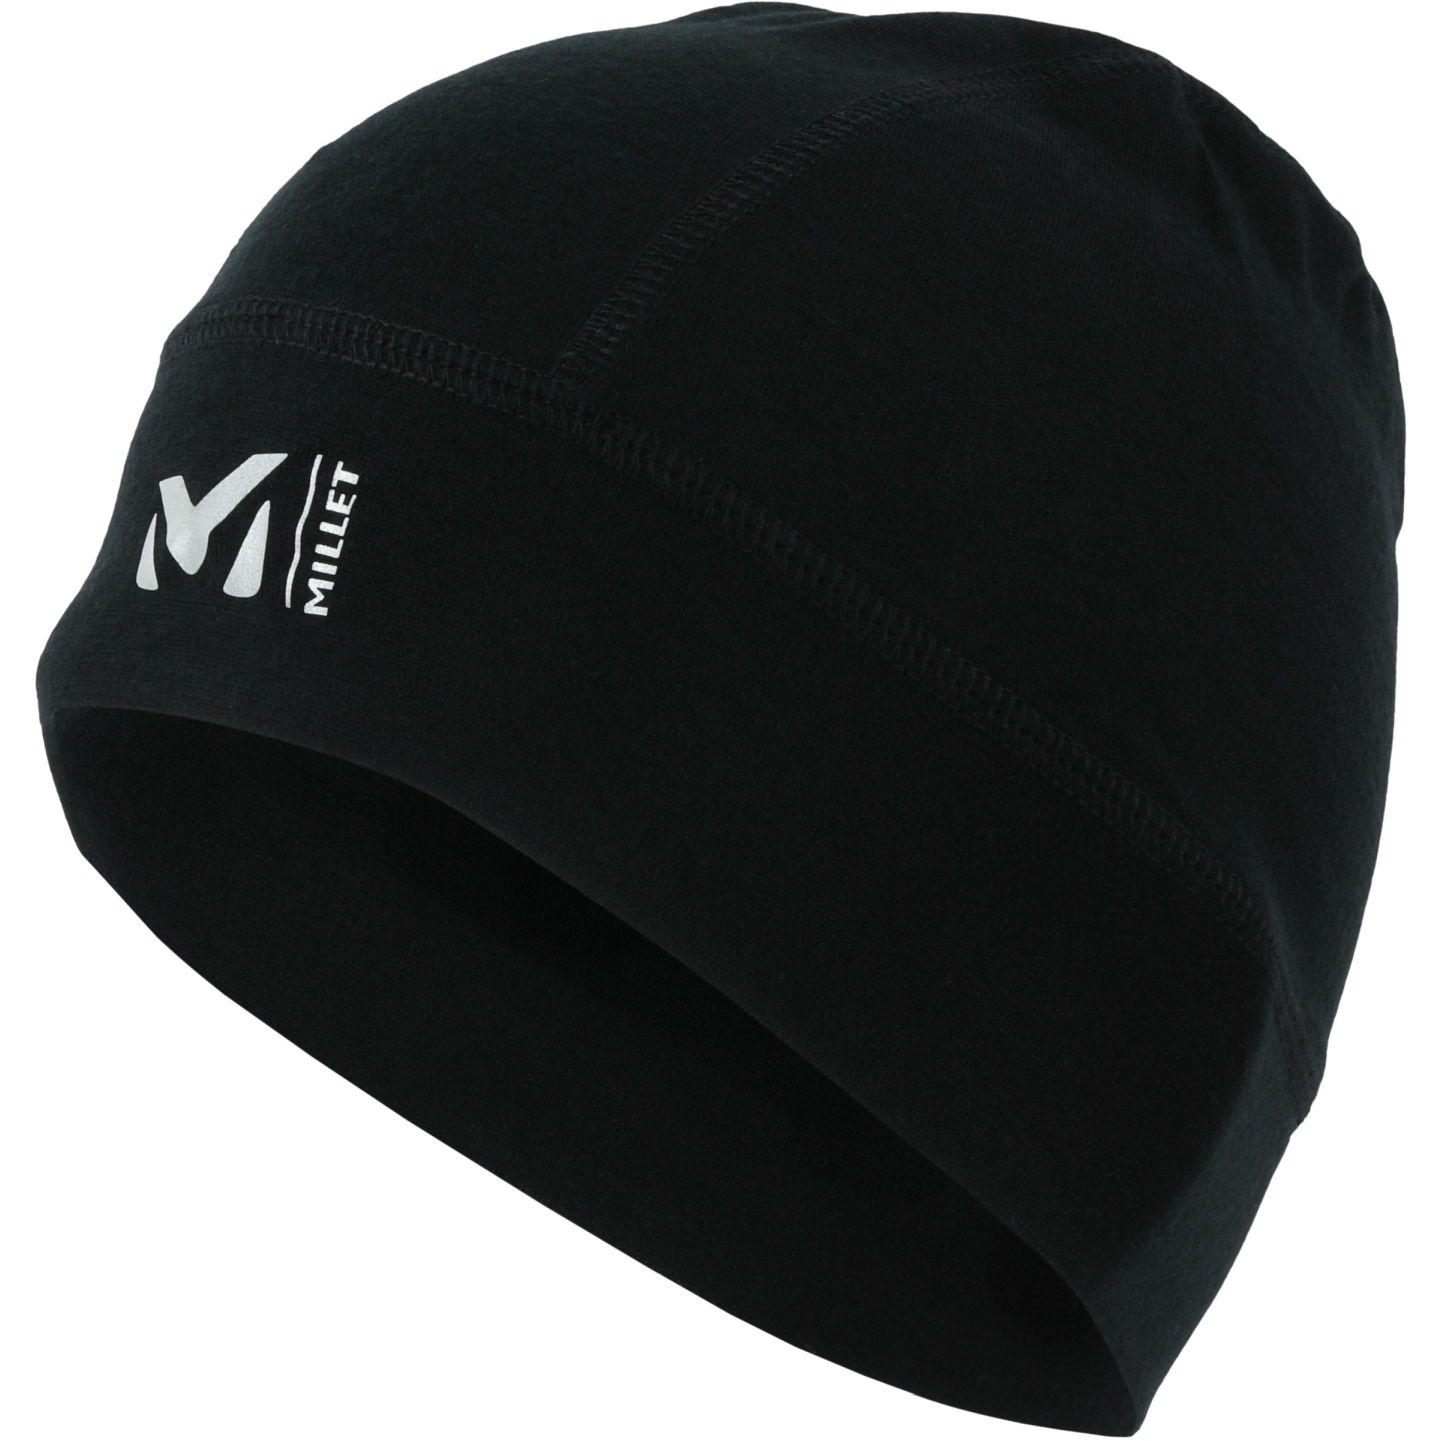 Productfoto van Millet Helmet Wool Liner Beanie - Zwart